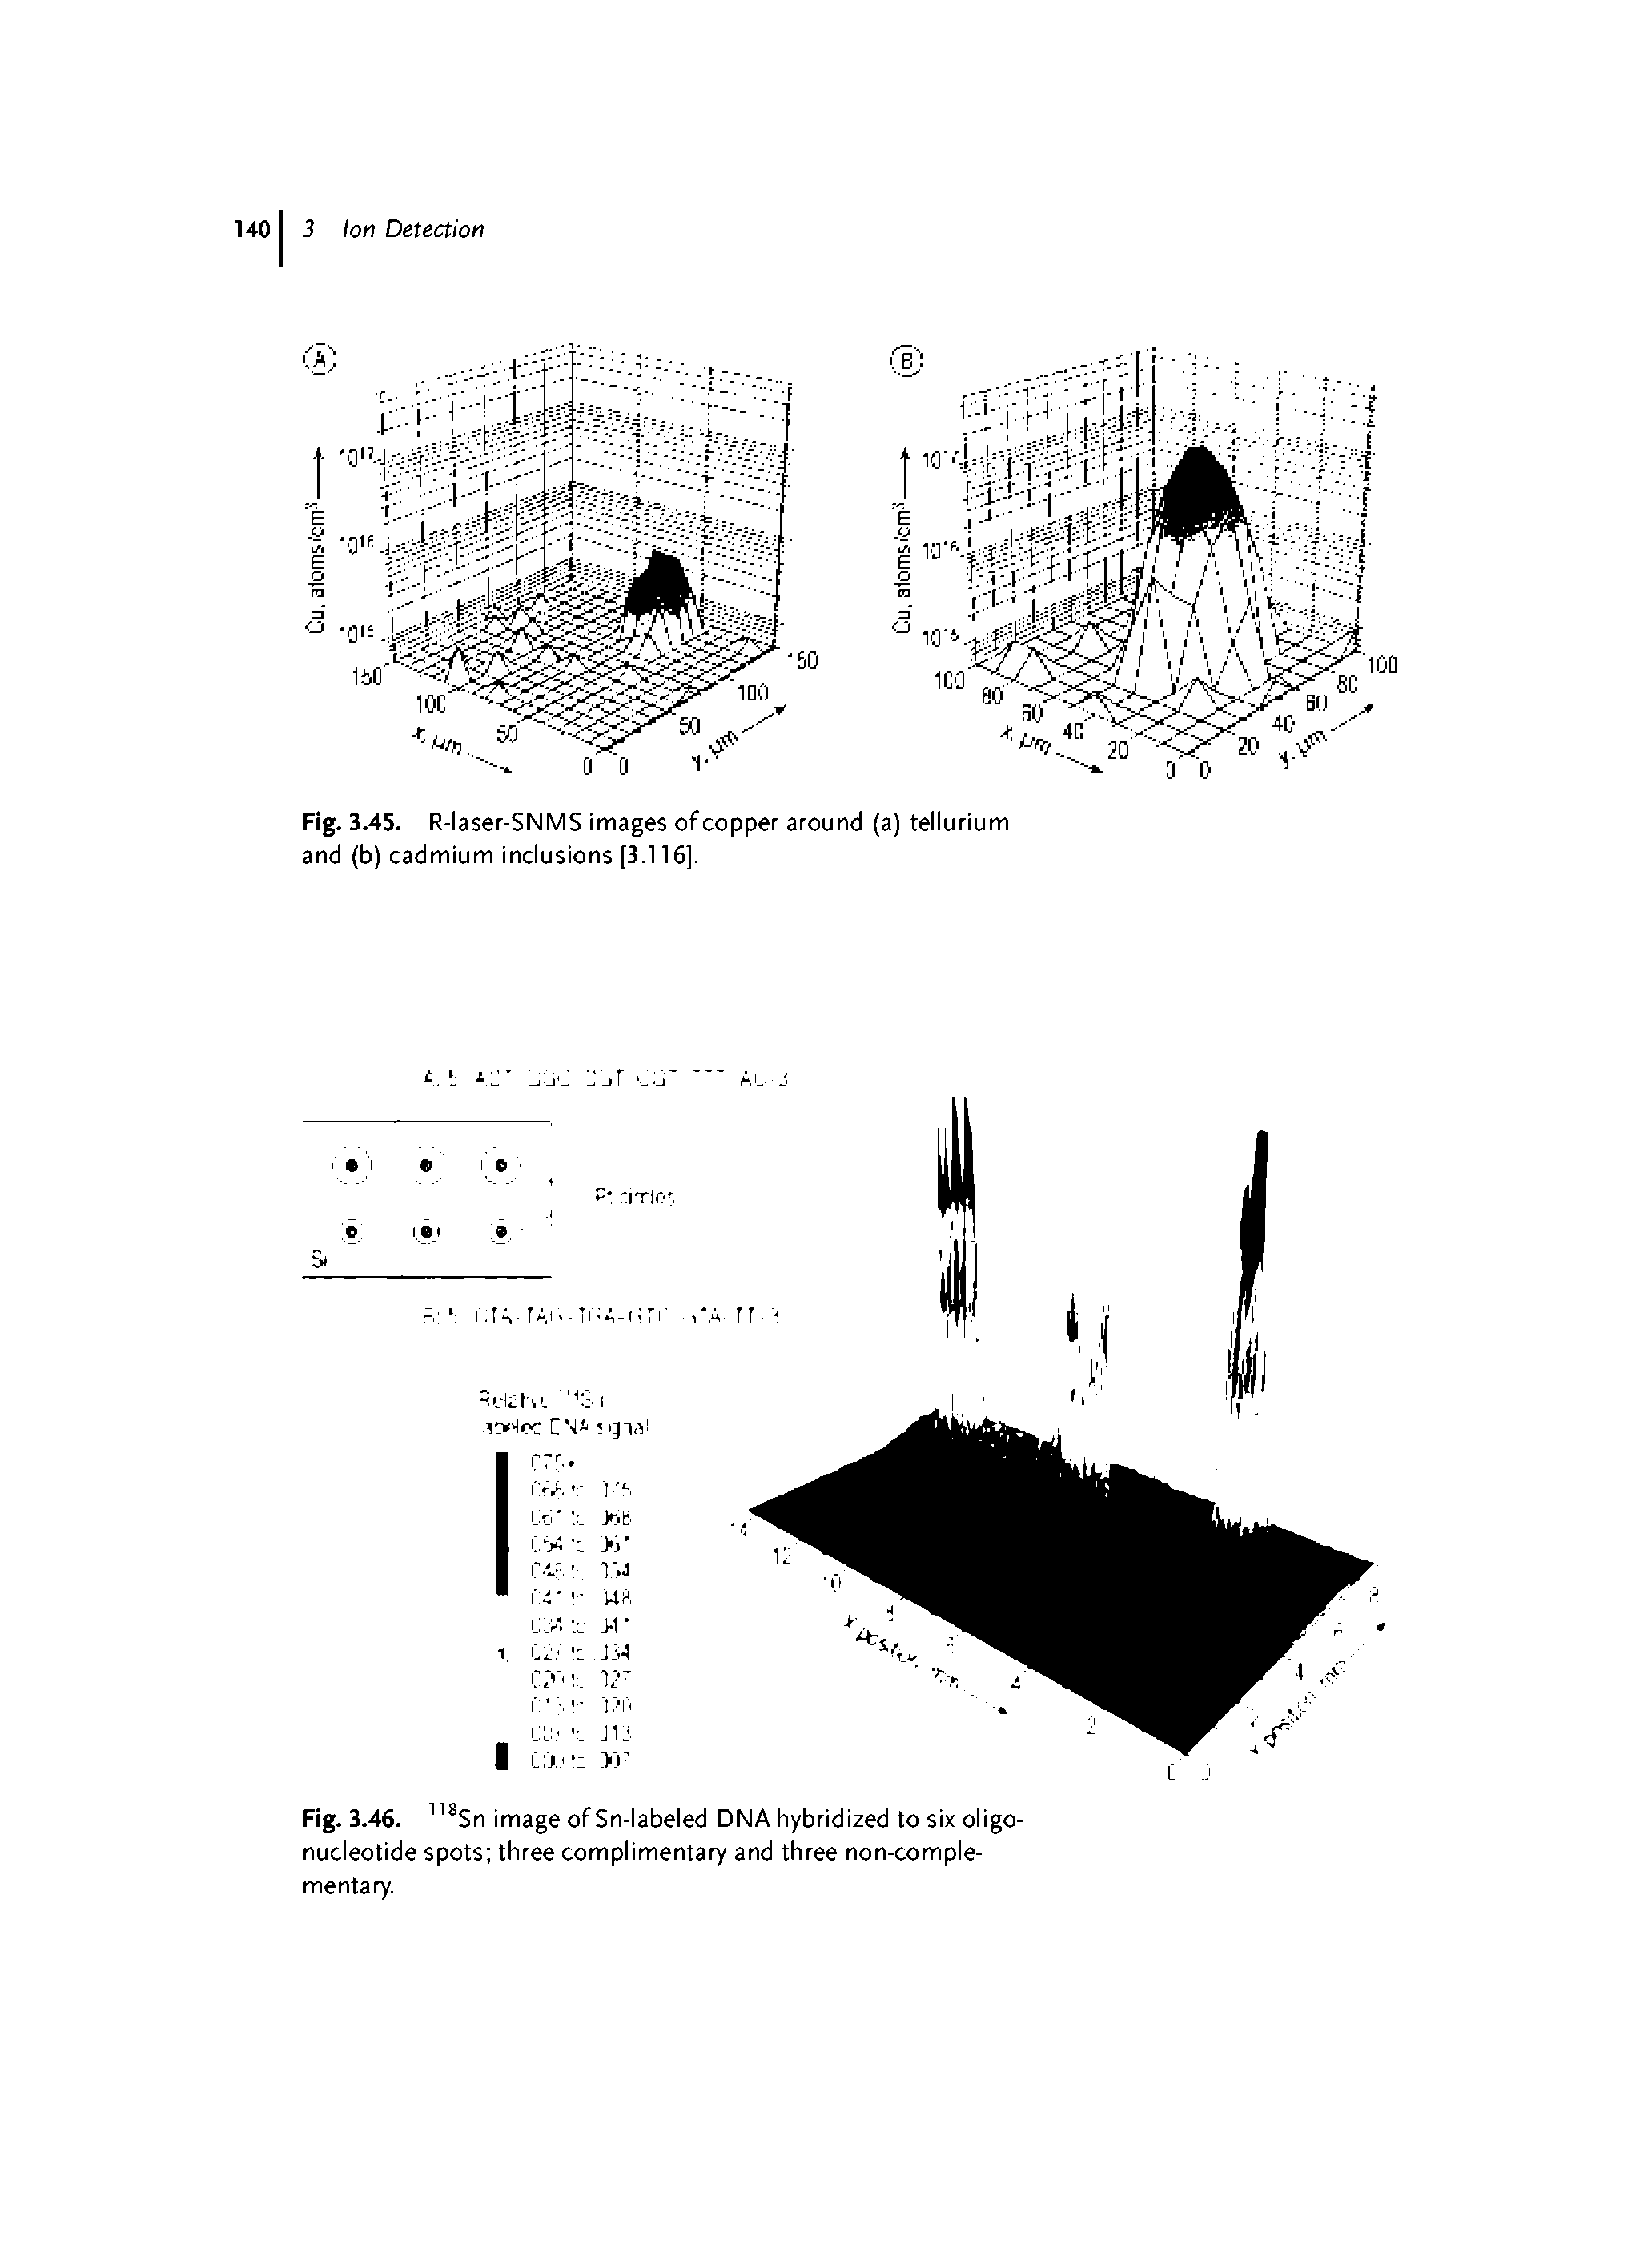 Fig. 3.45. R-laser-SNMS images of copper around (a) tellurium and (b) cadmium inclusions [3.116].